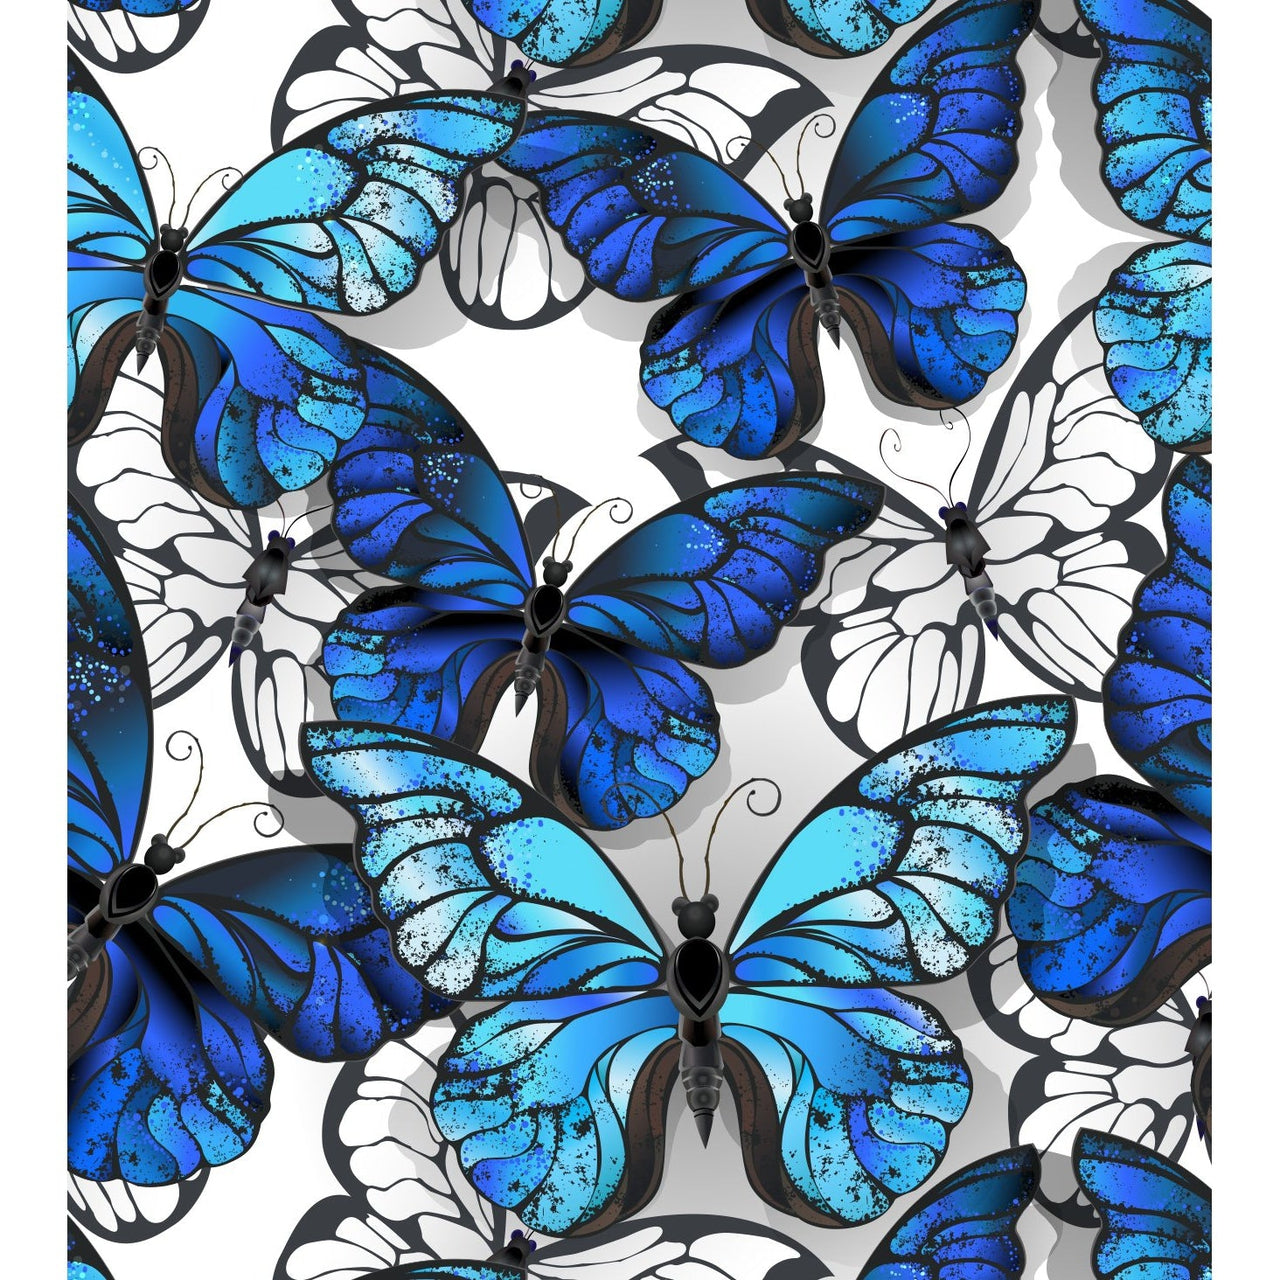 Blue Butterfly Socks - Hocsocx Inc